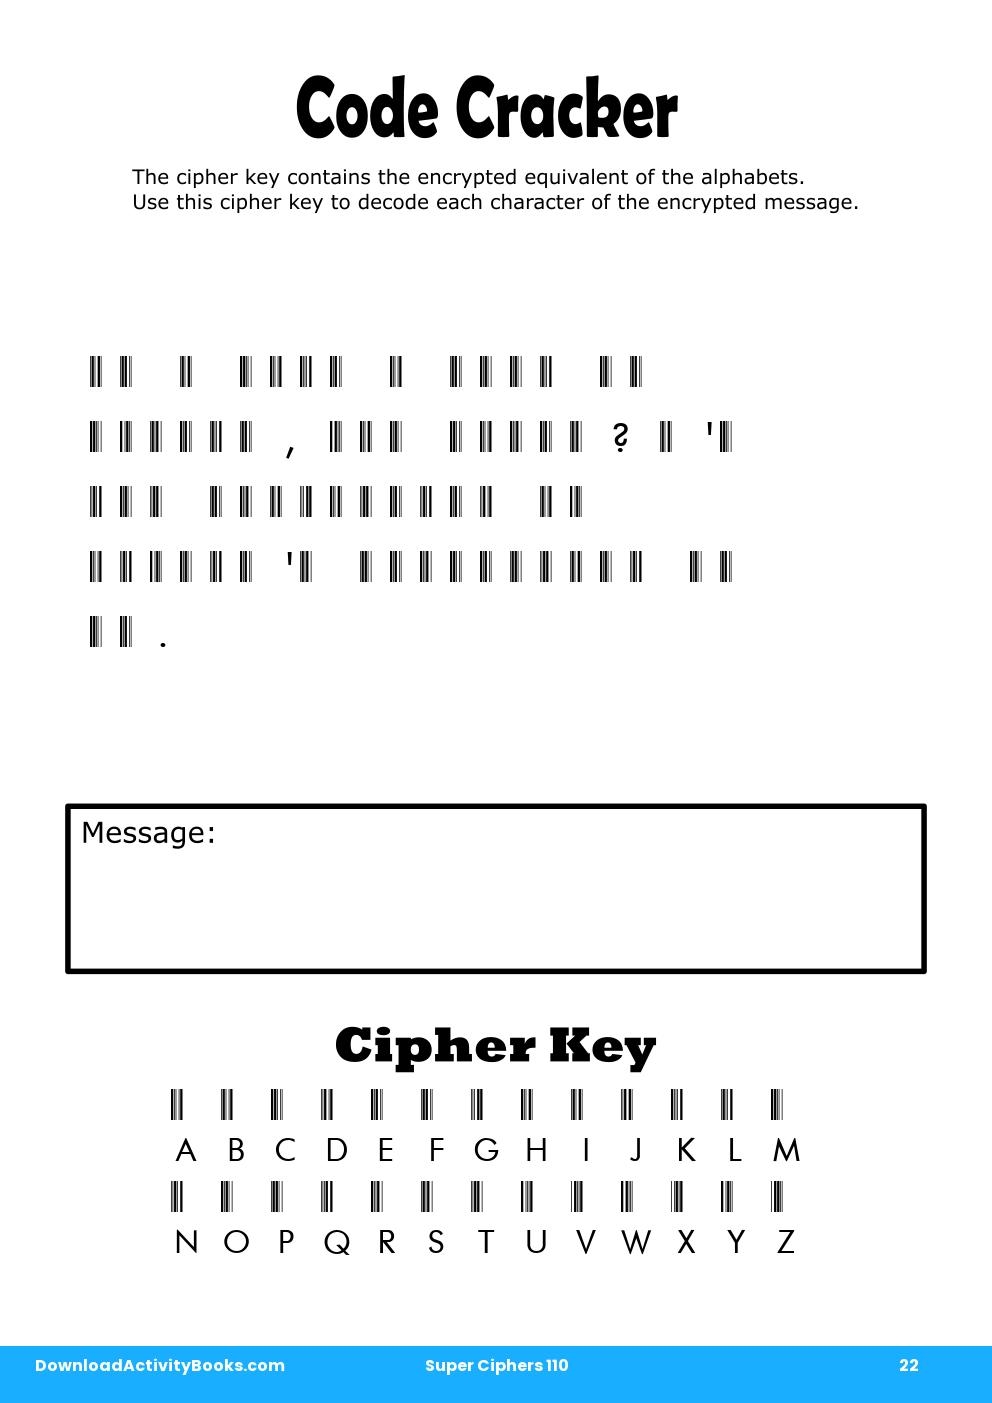 Code Cracker in Super Ciphers 110